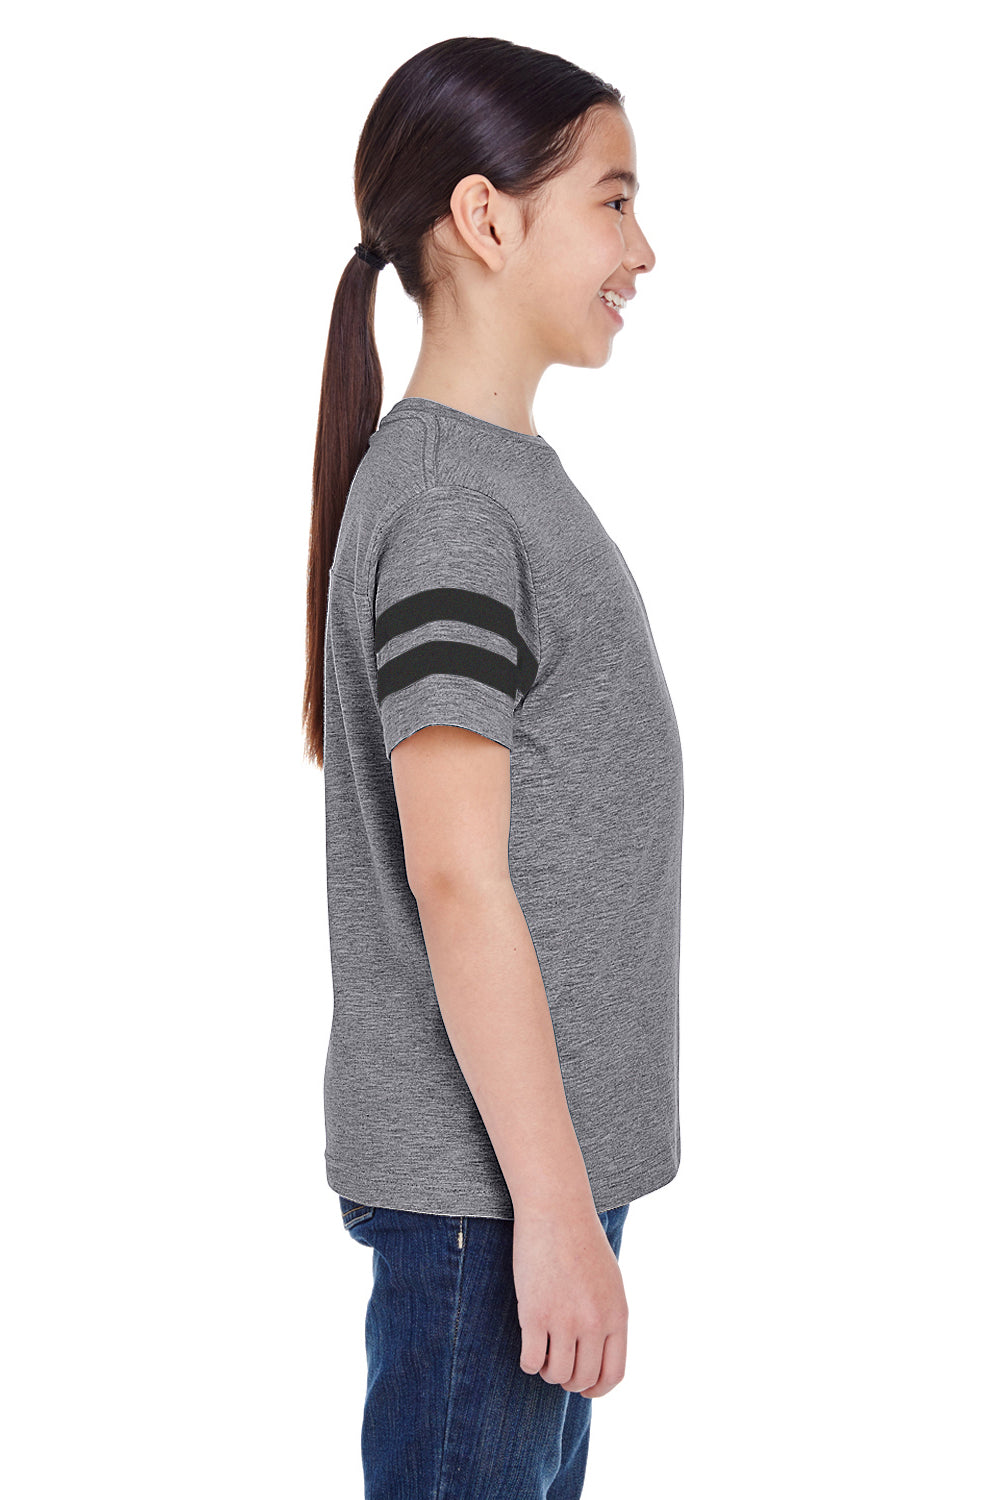 LAT 6137 Youth Fine Jersey Short Sleeve Crewneck T-Shirt Heather Granite Grey/Smoke Grey Side